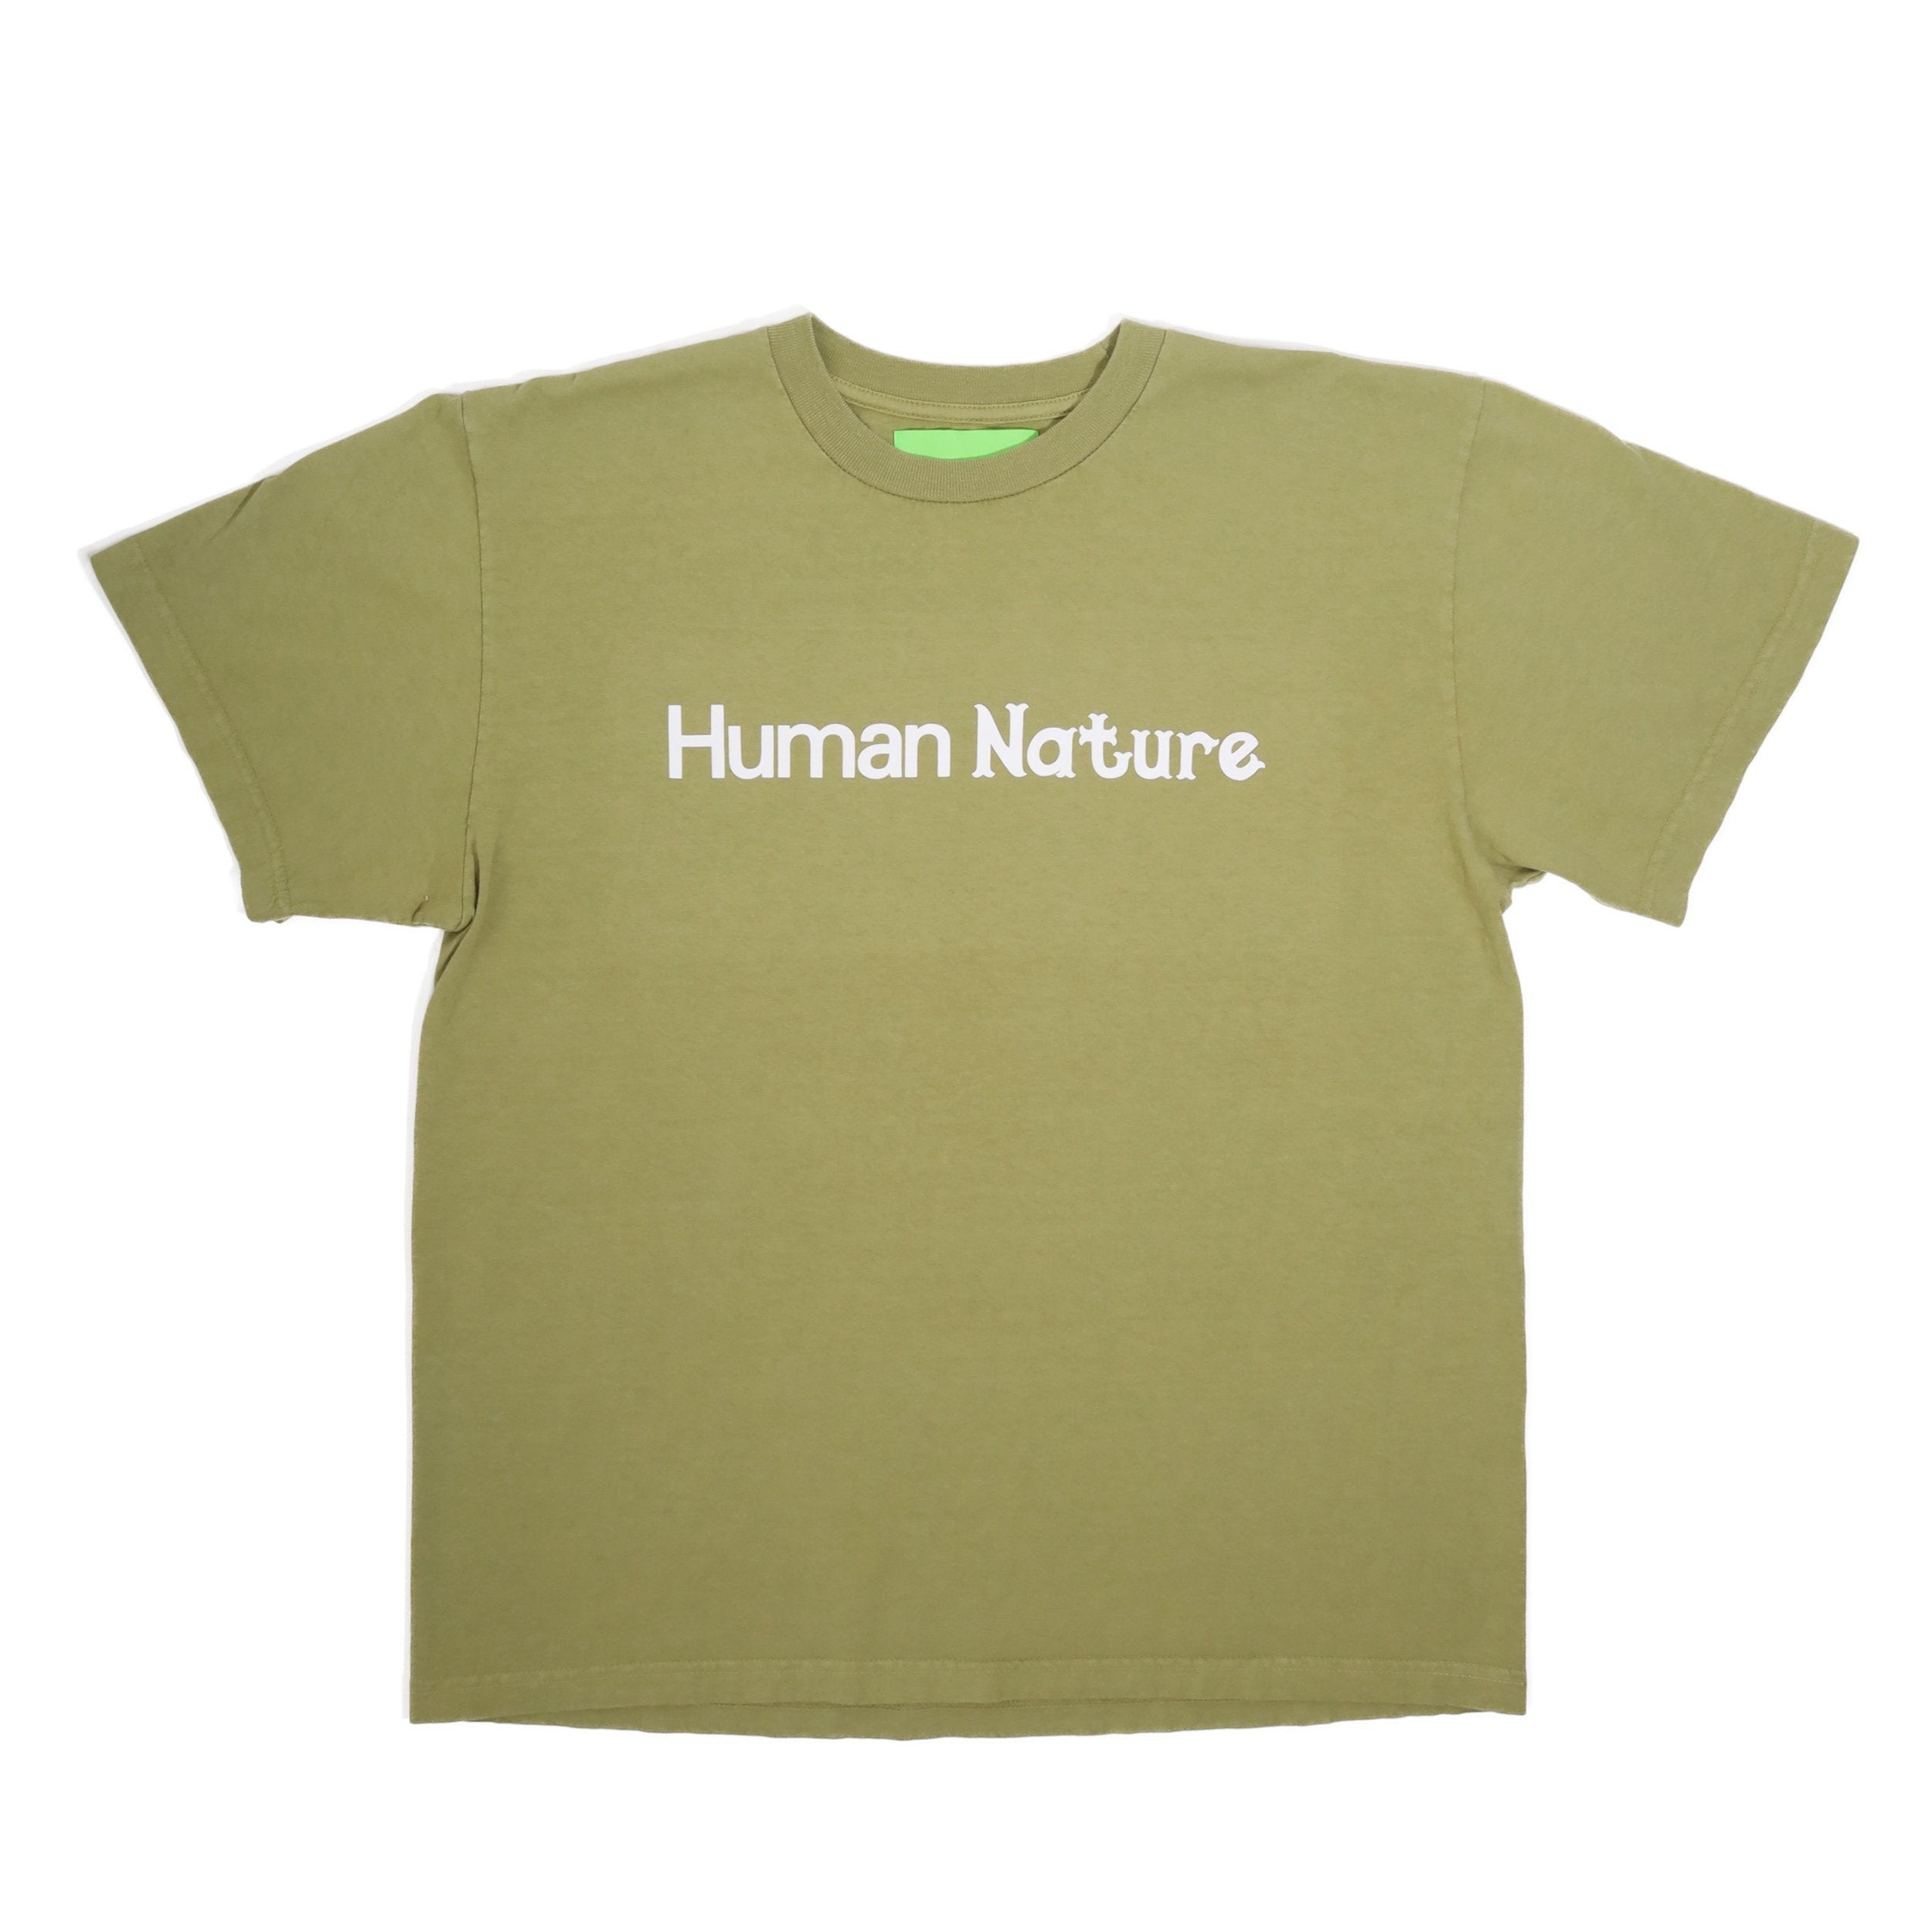 Human Nature Tee - Chlorophyll-Mister Green-Mister Green